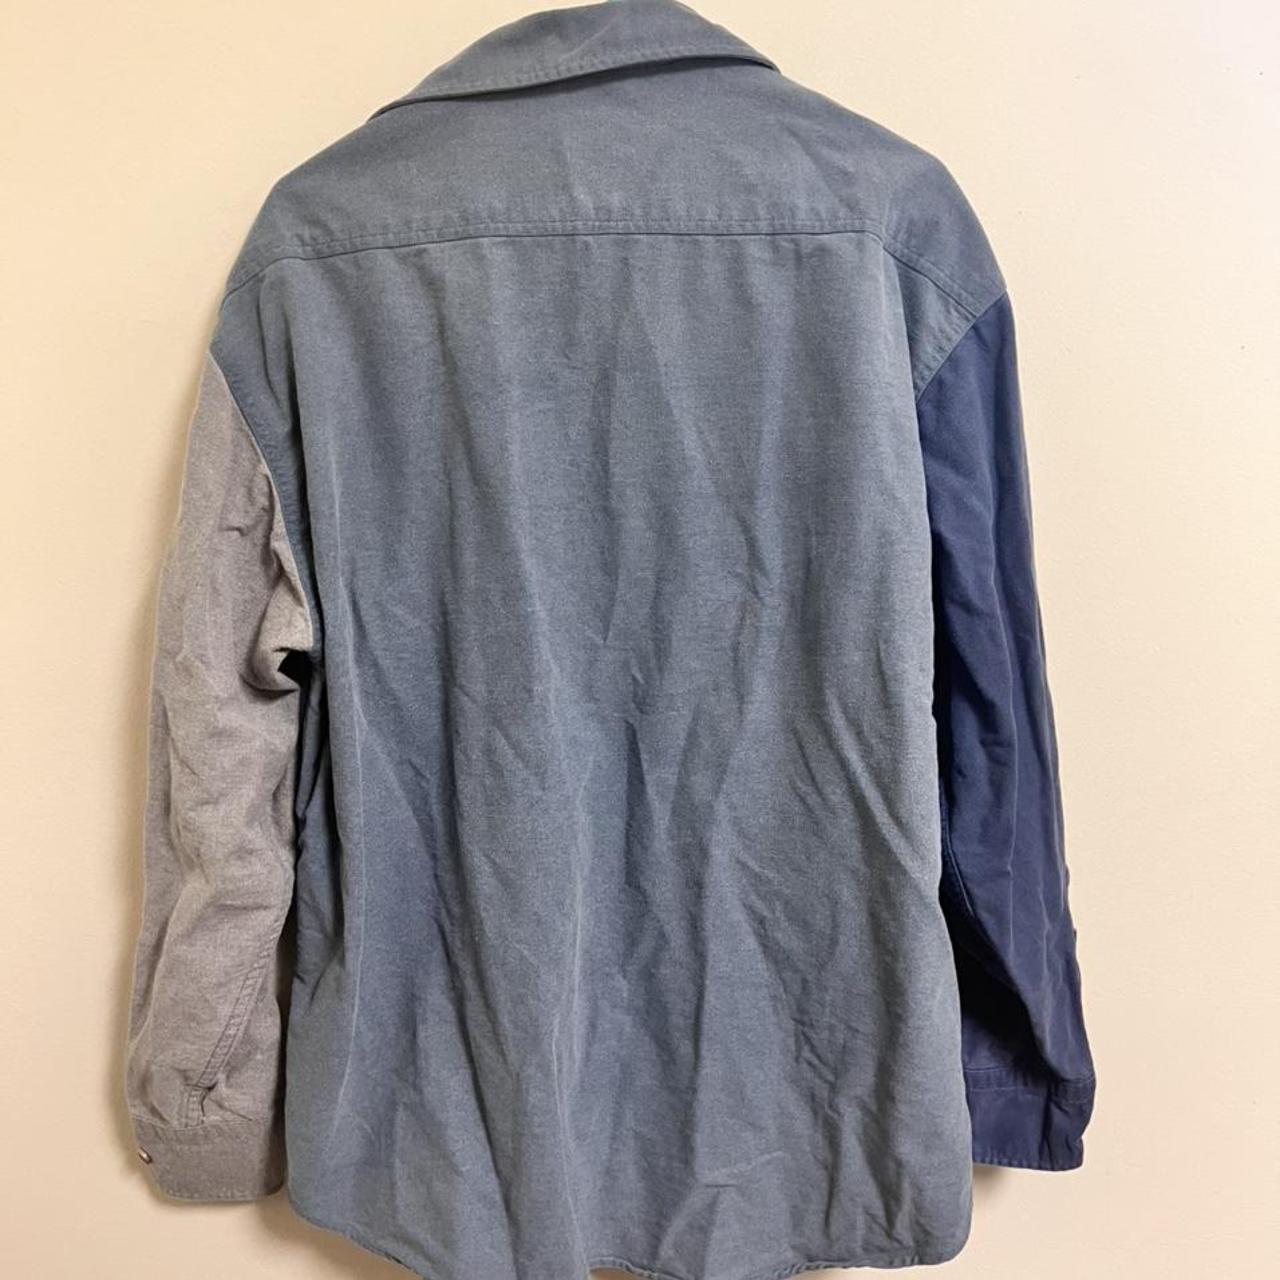 Men's Blue and Grey Jacket (2)